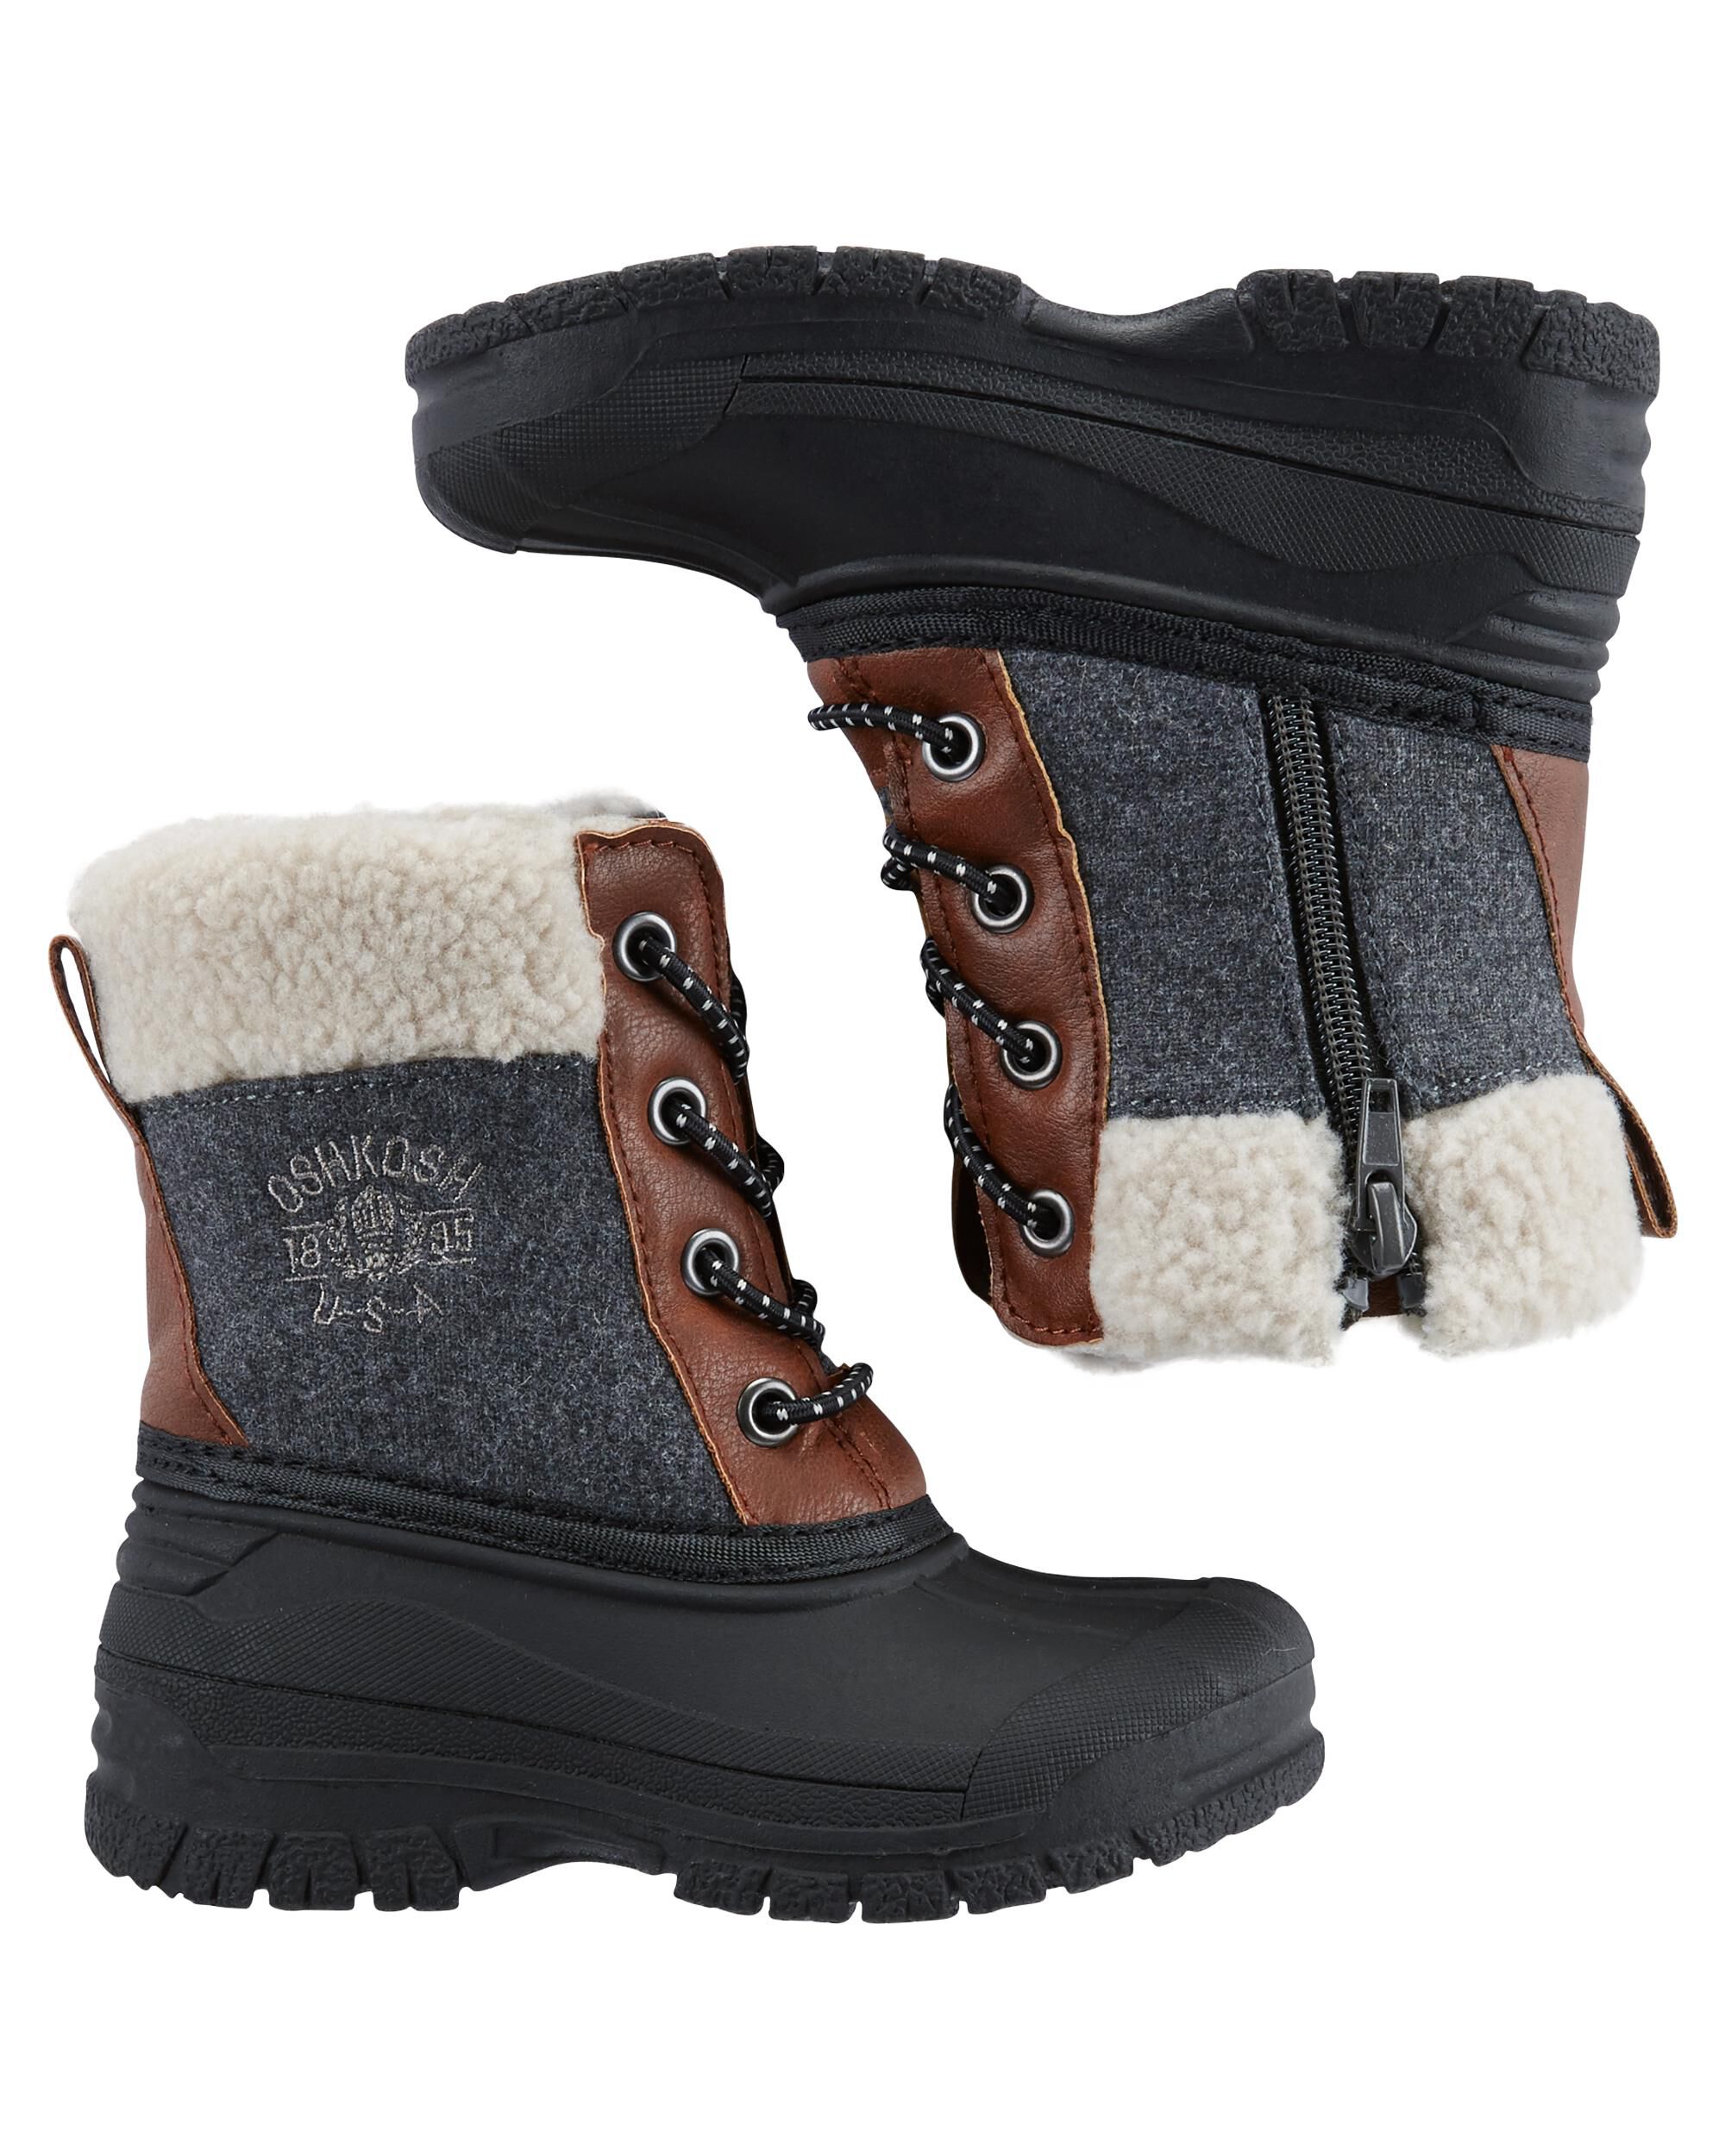 OshKosh Snow Boots | oshkosh.com